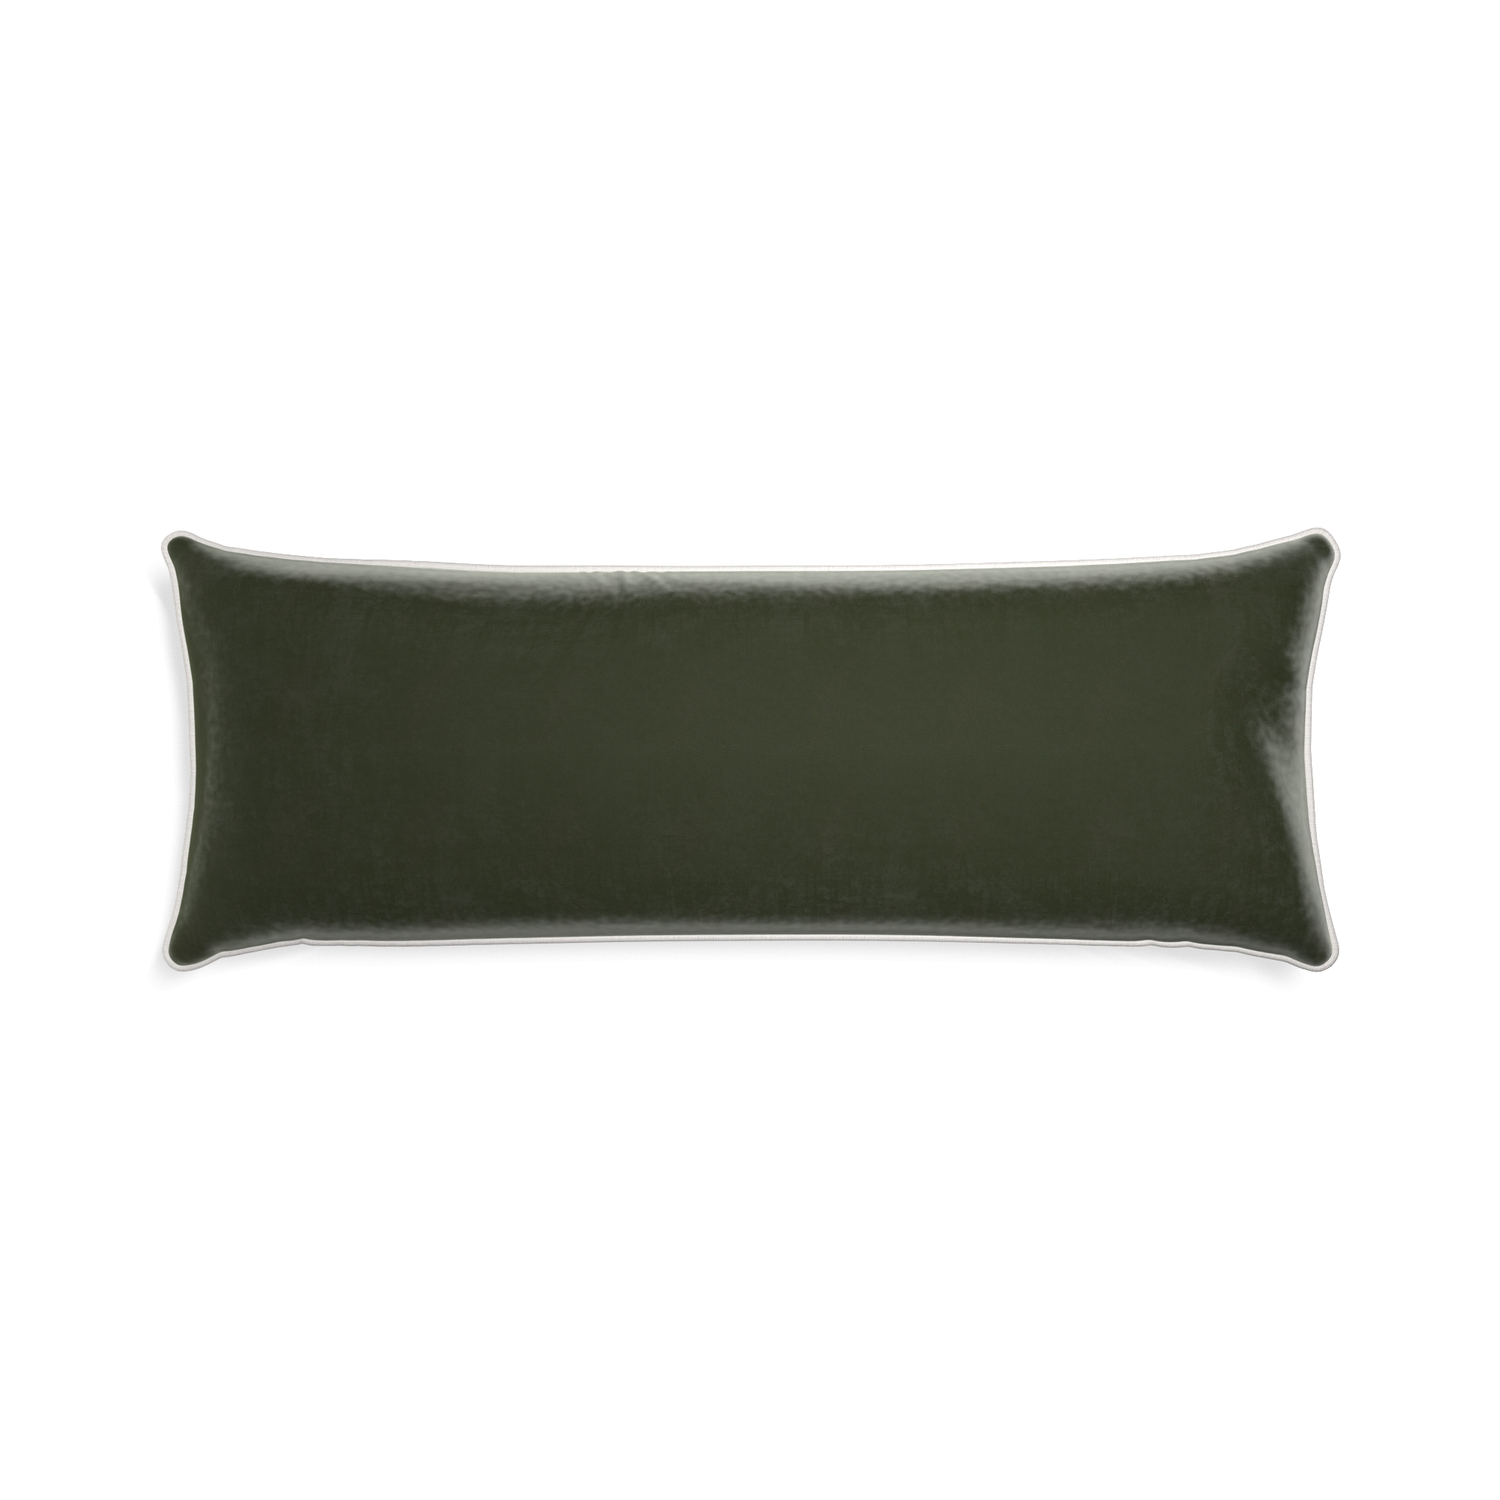 rectangle fern green velvet pillow with white piping